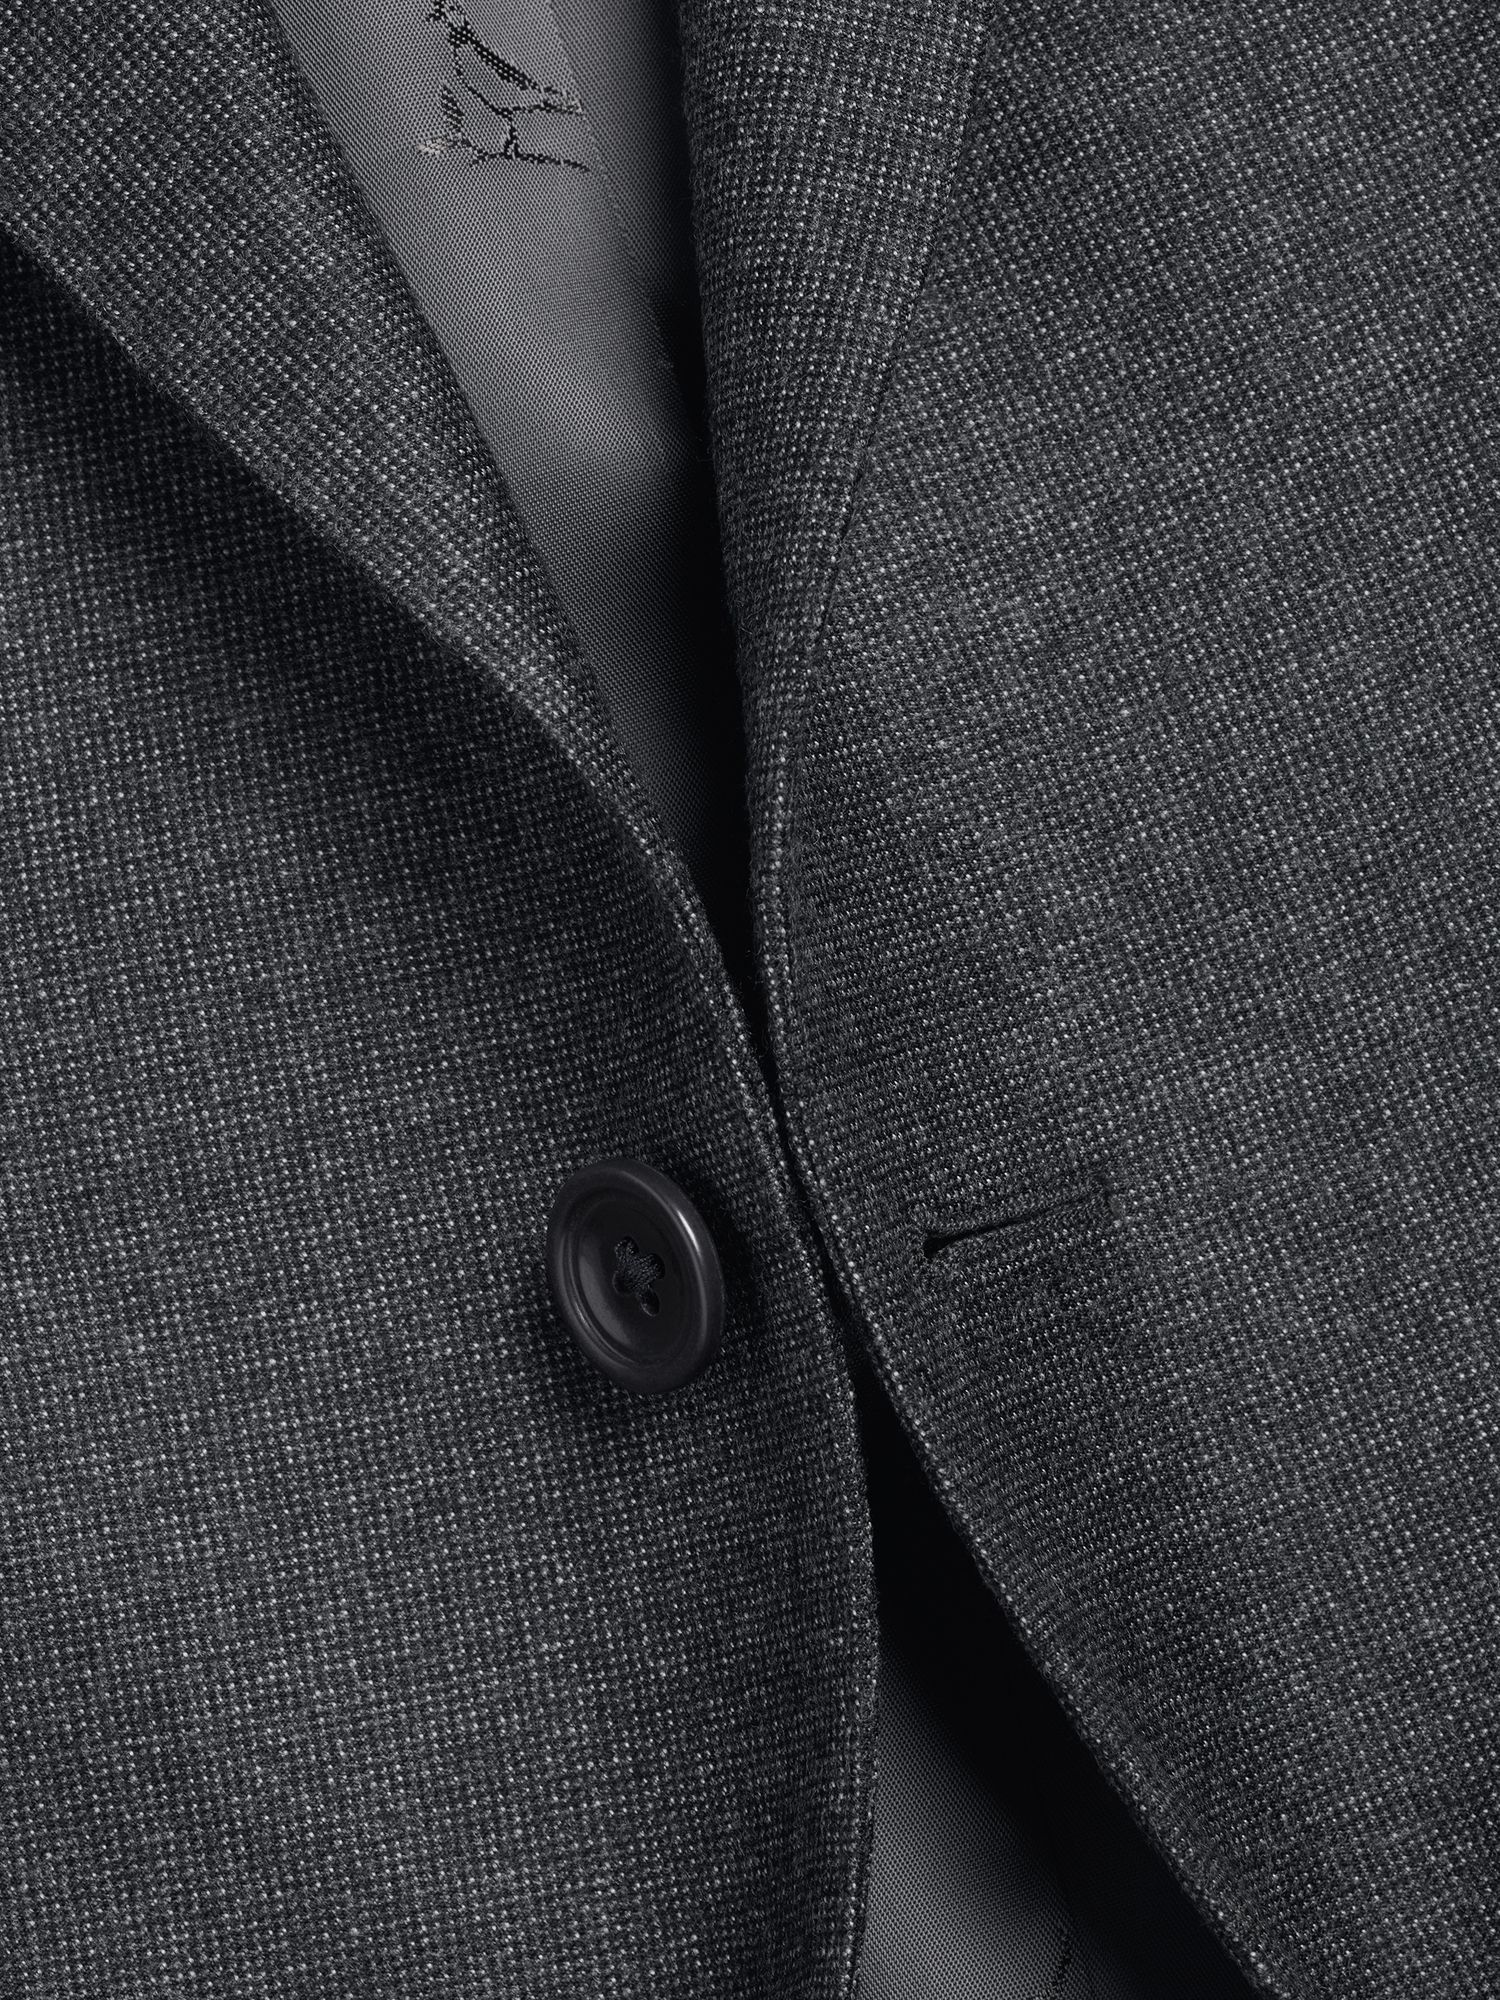 Charles Tyrwhitt Italian Pindot Wool Slim Fit Suit Jacket, Grey at John ...